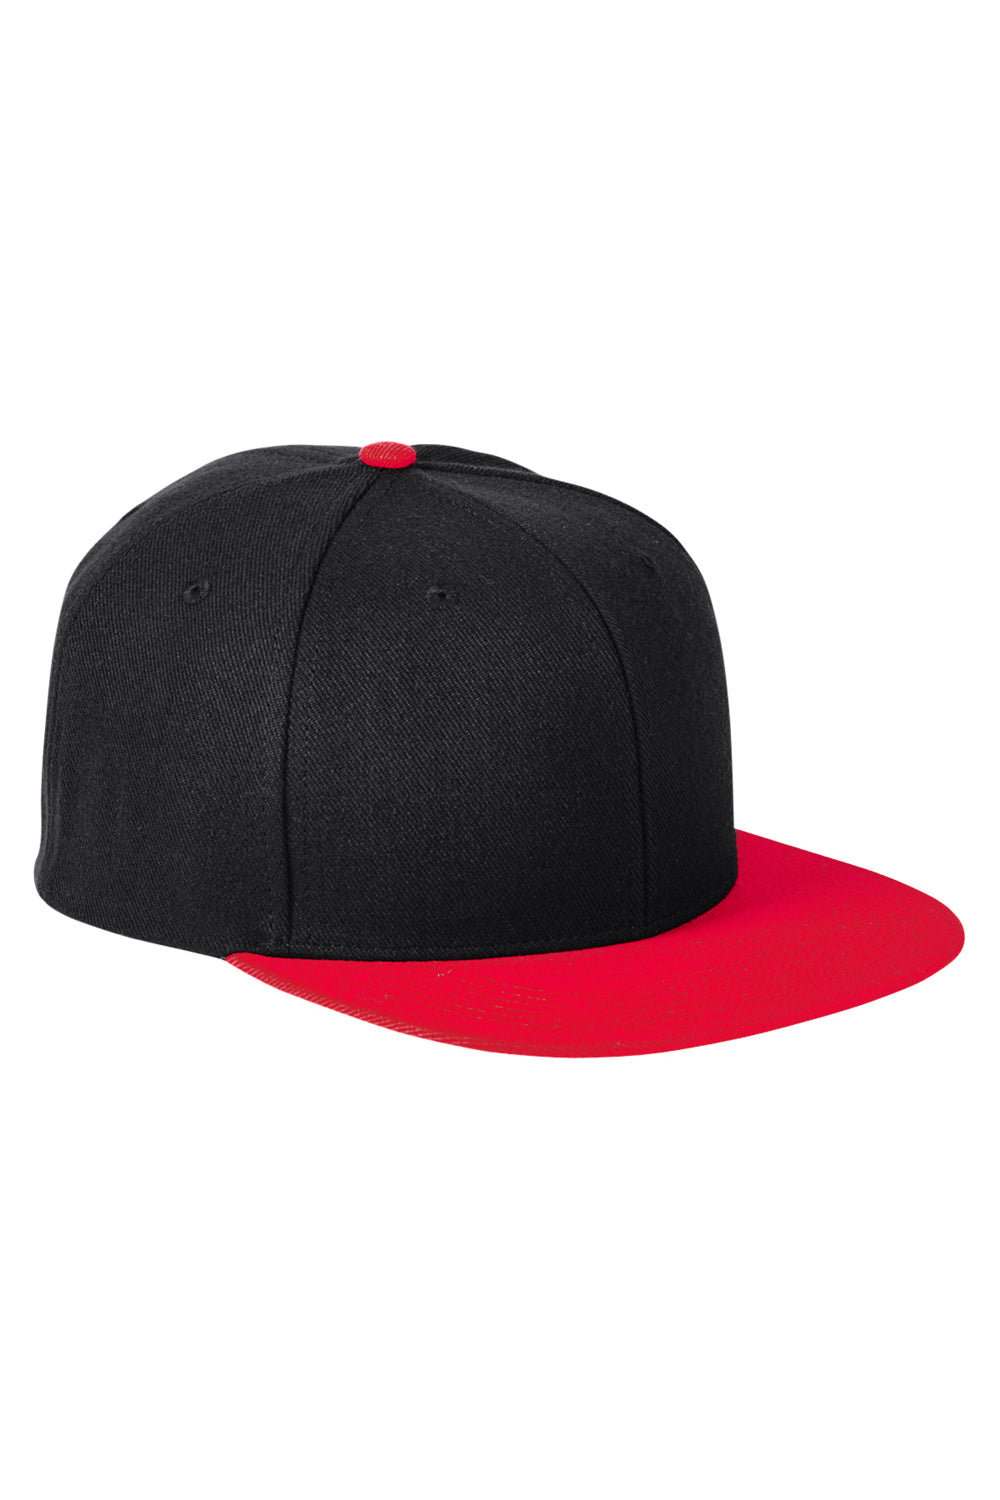 Big Accessories BA539 Mens Adjustable Hat Black/Red Flat Front